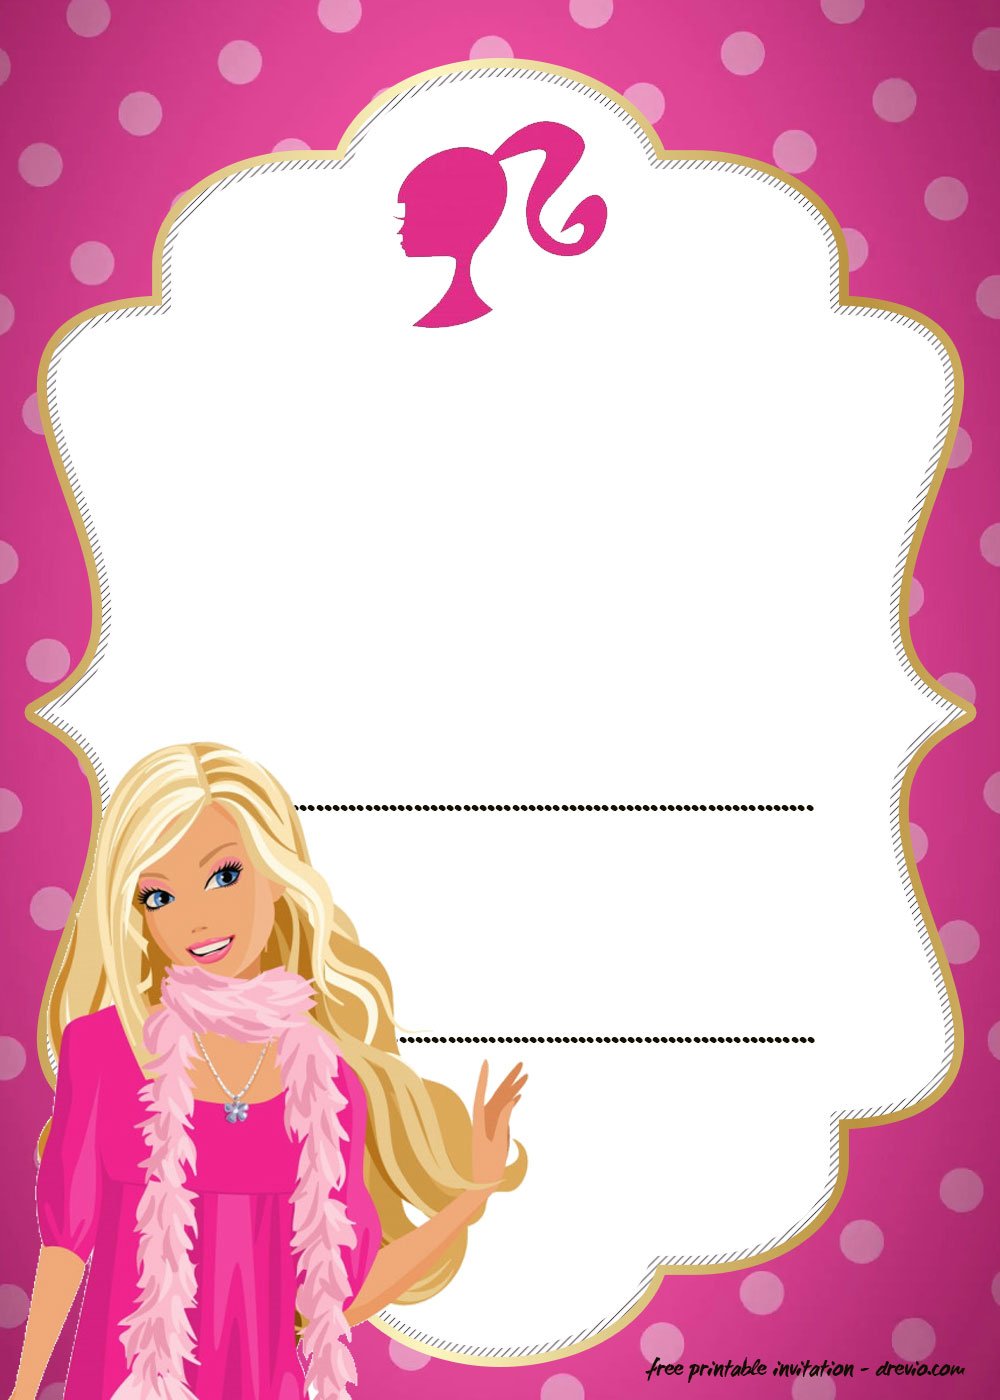 FREE Polkadot Pink Barbie Invitation Templates Download Hundreds FREE